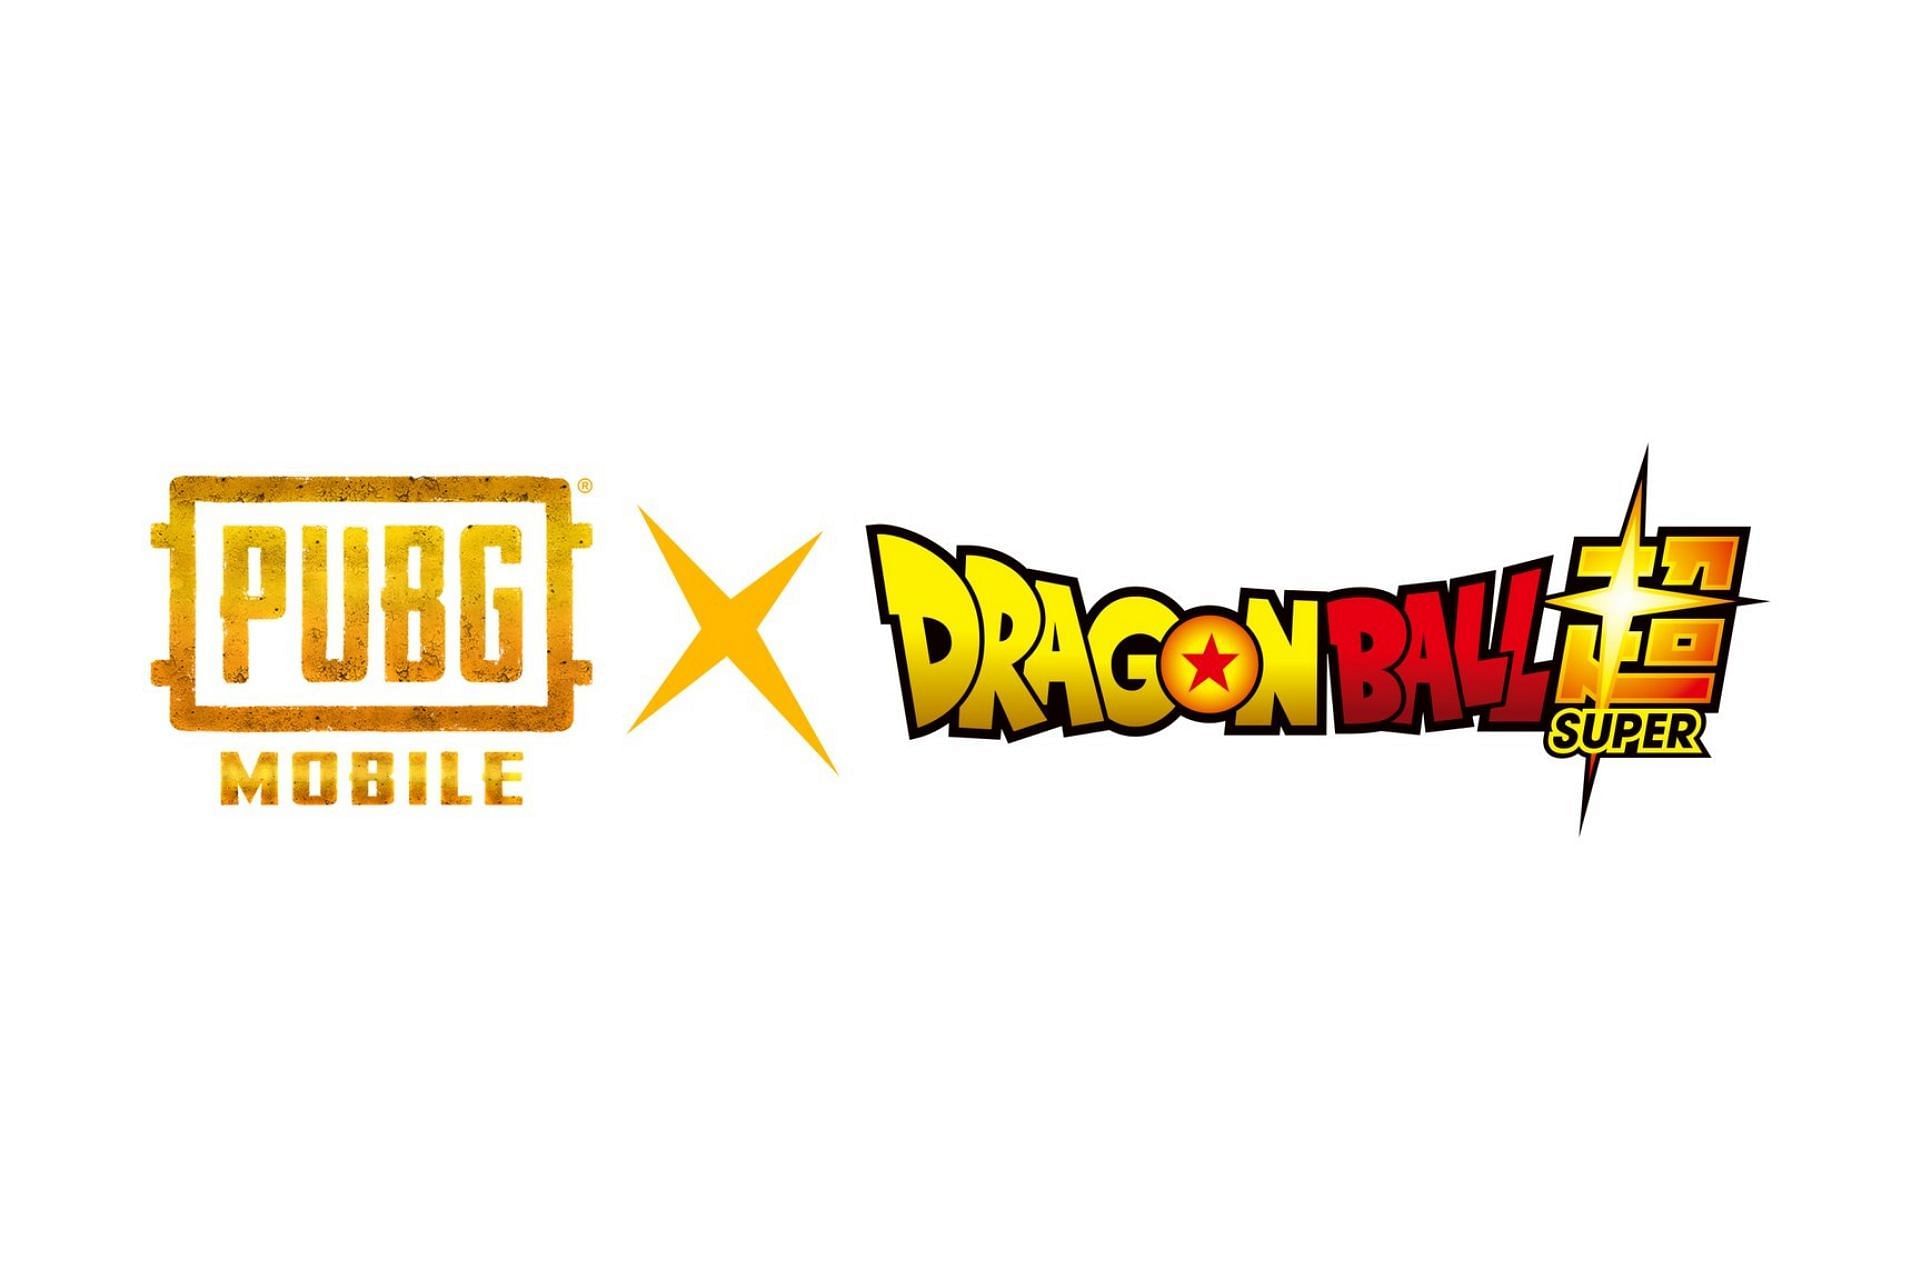 Dragon Ball Super: Super Hero Arrives in Mobile Game Dragon Ball